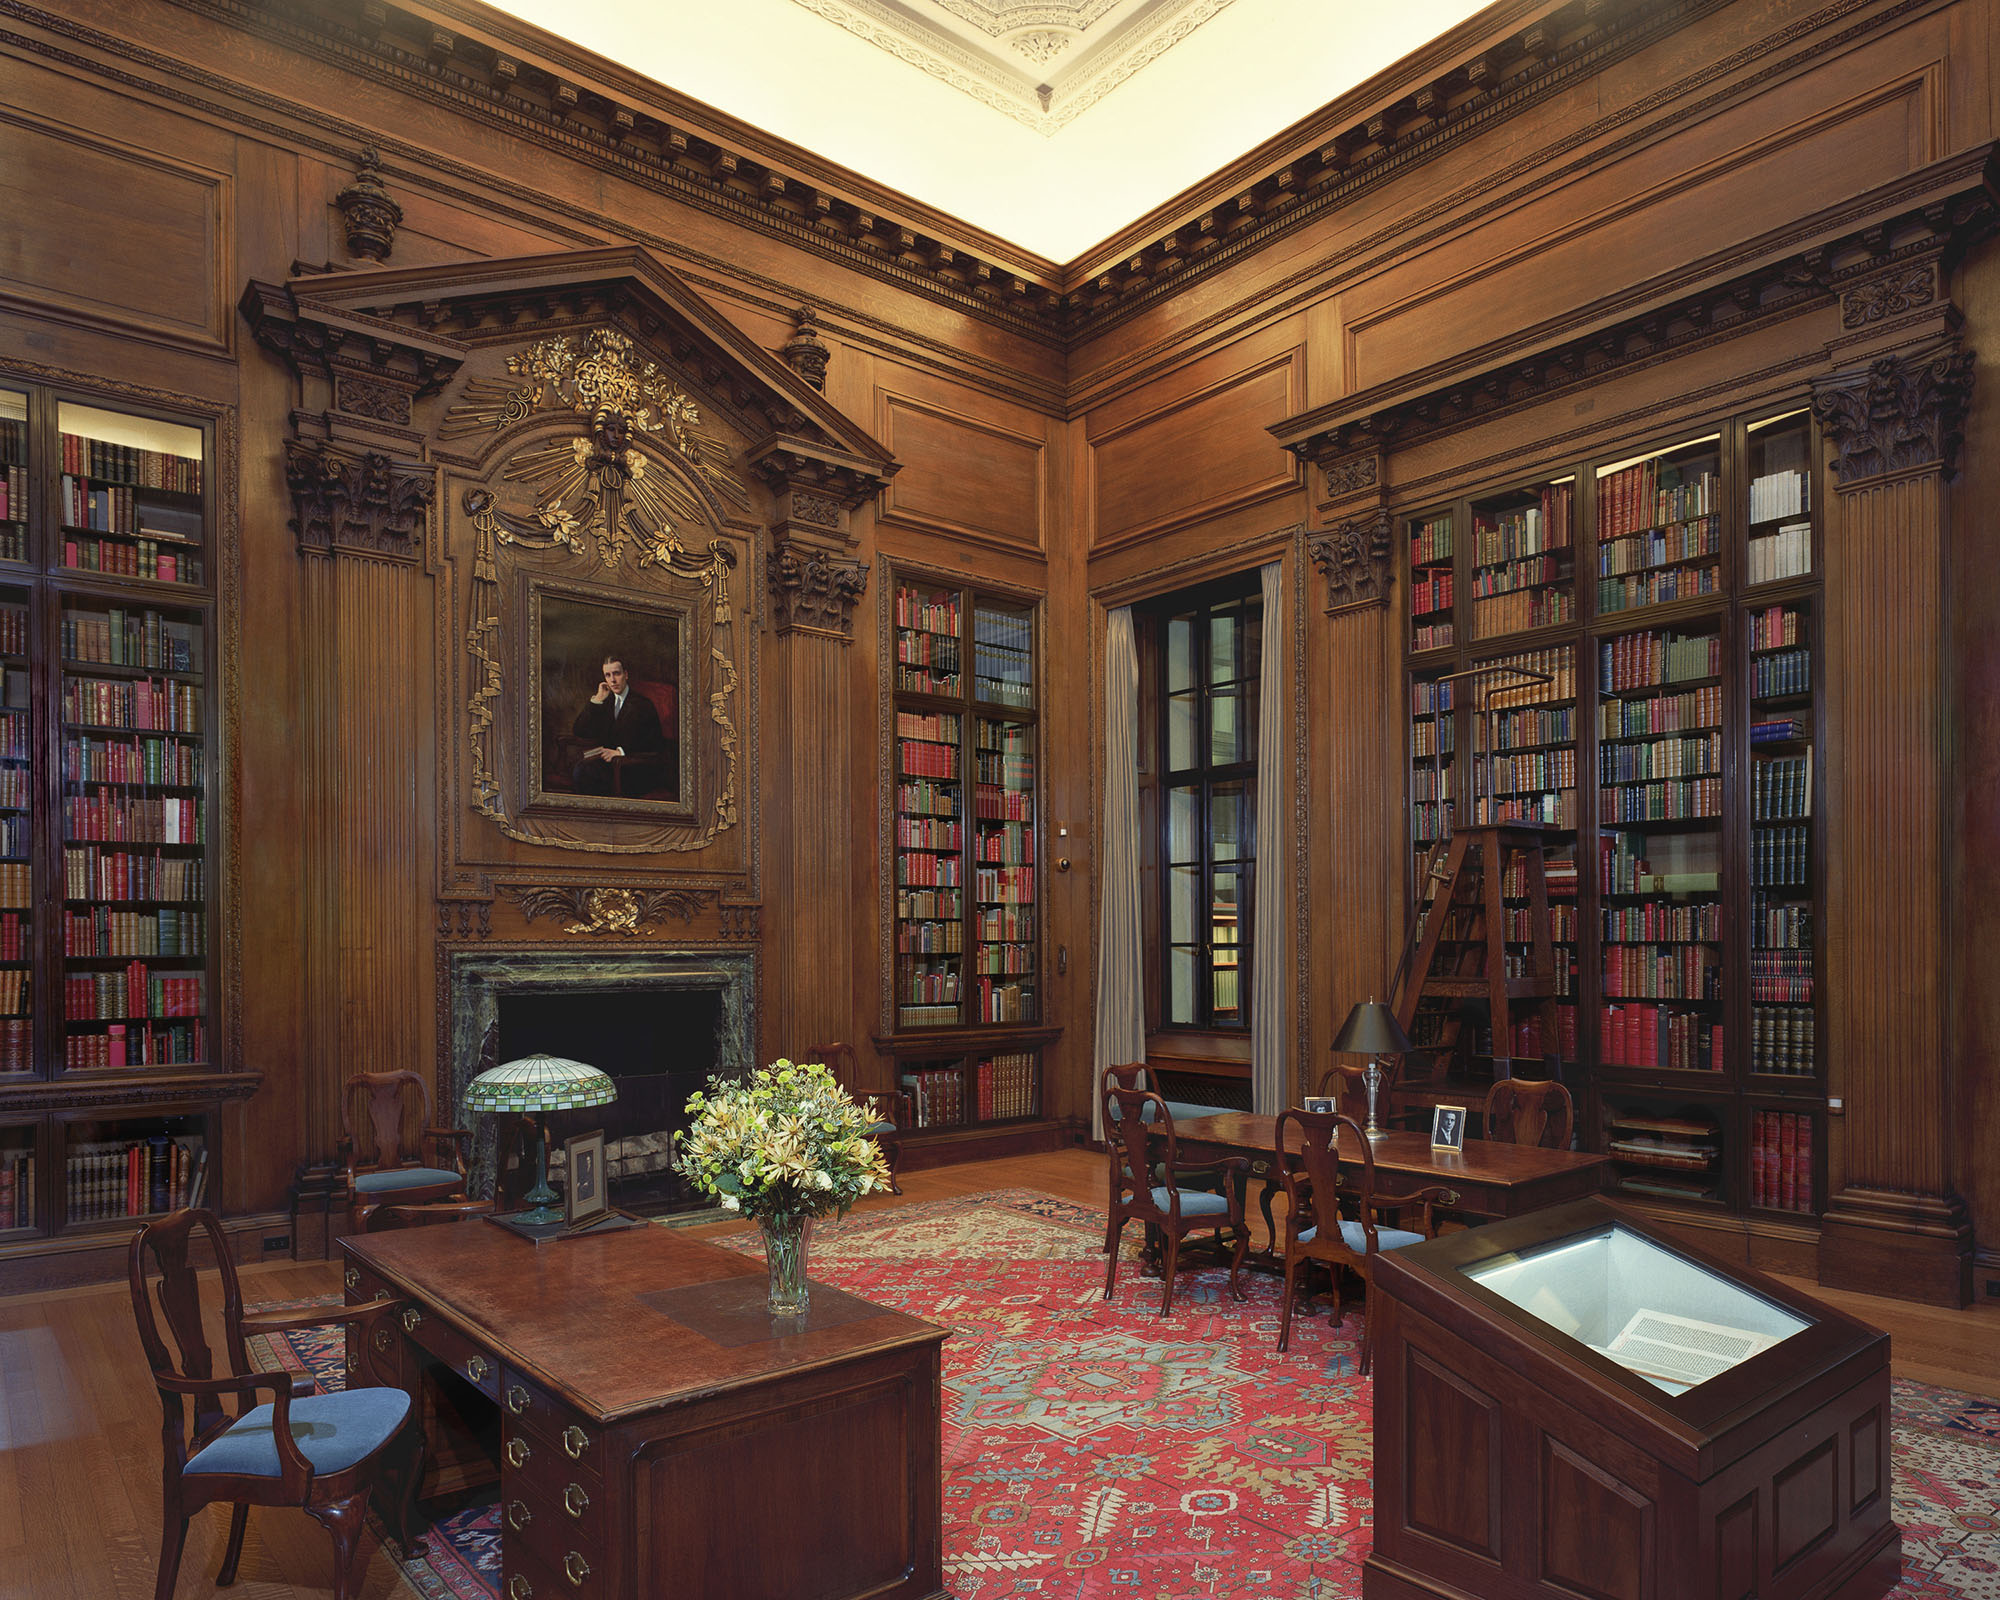 Who in the hall. Библиотека Гарварда. Гарвард в Кембридже библиотека. Библиотека Гарвардского университета. Библиотеке Гарвардского университета (США.